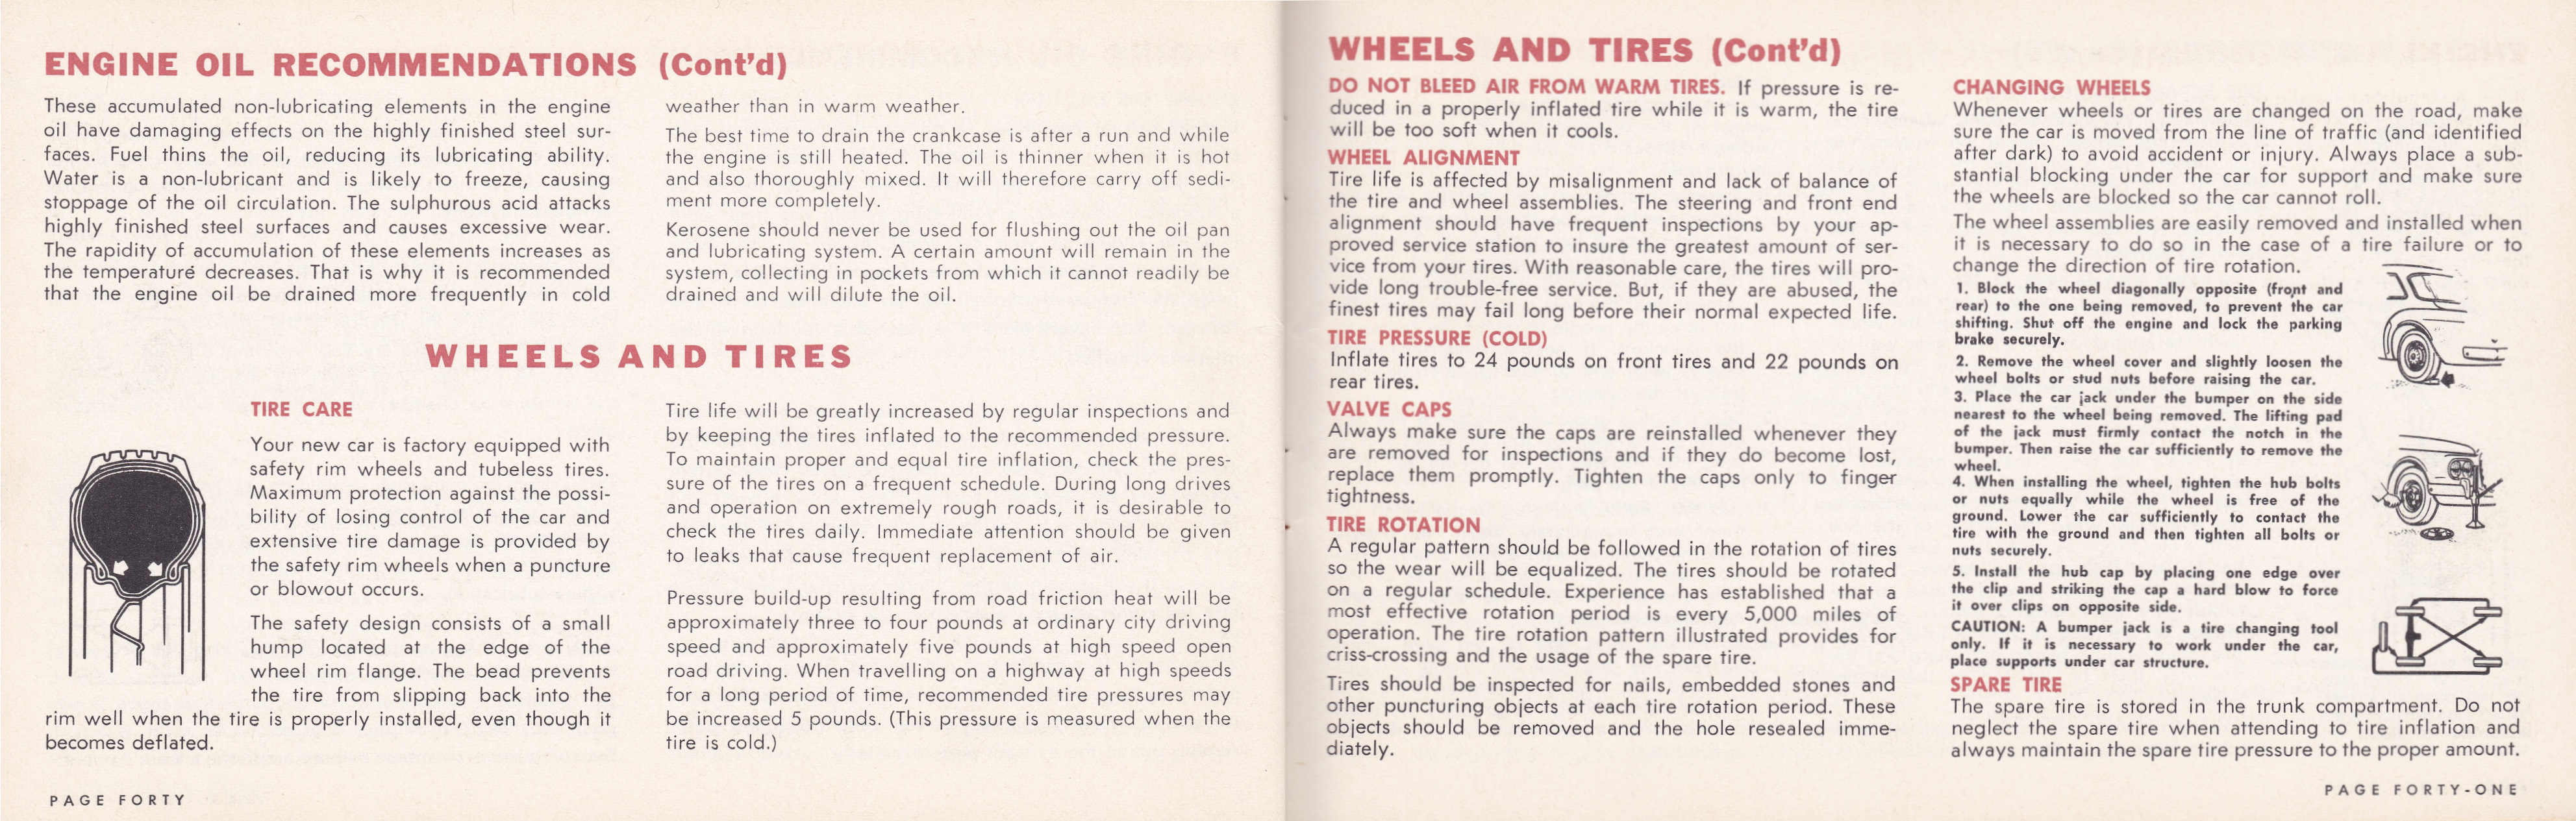 1964_Chrysler_Owners_Manual_Cdn-40-41